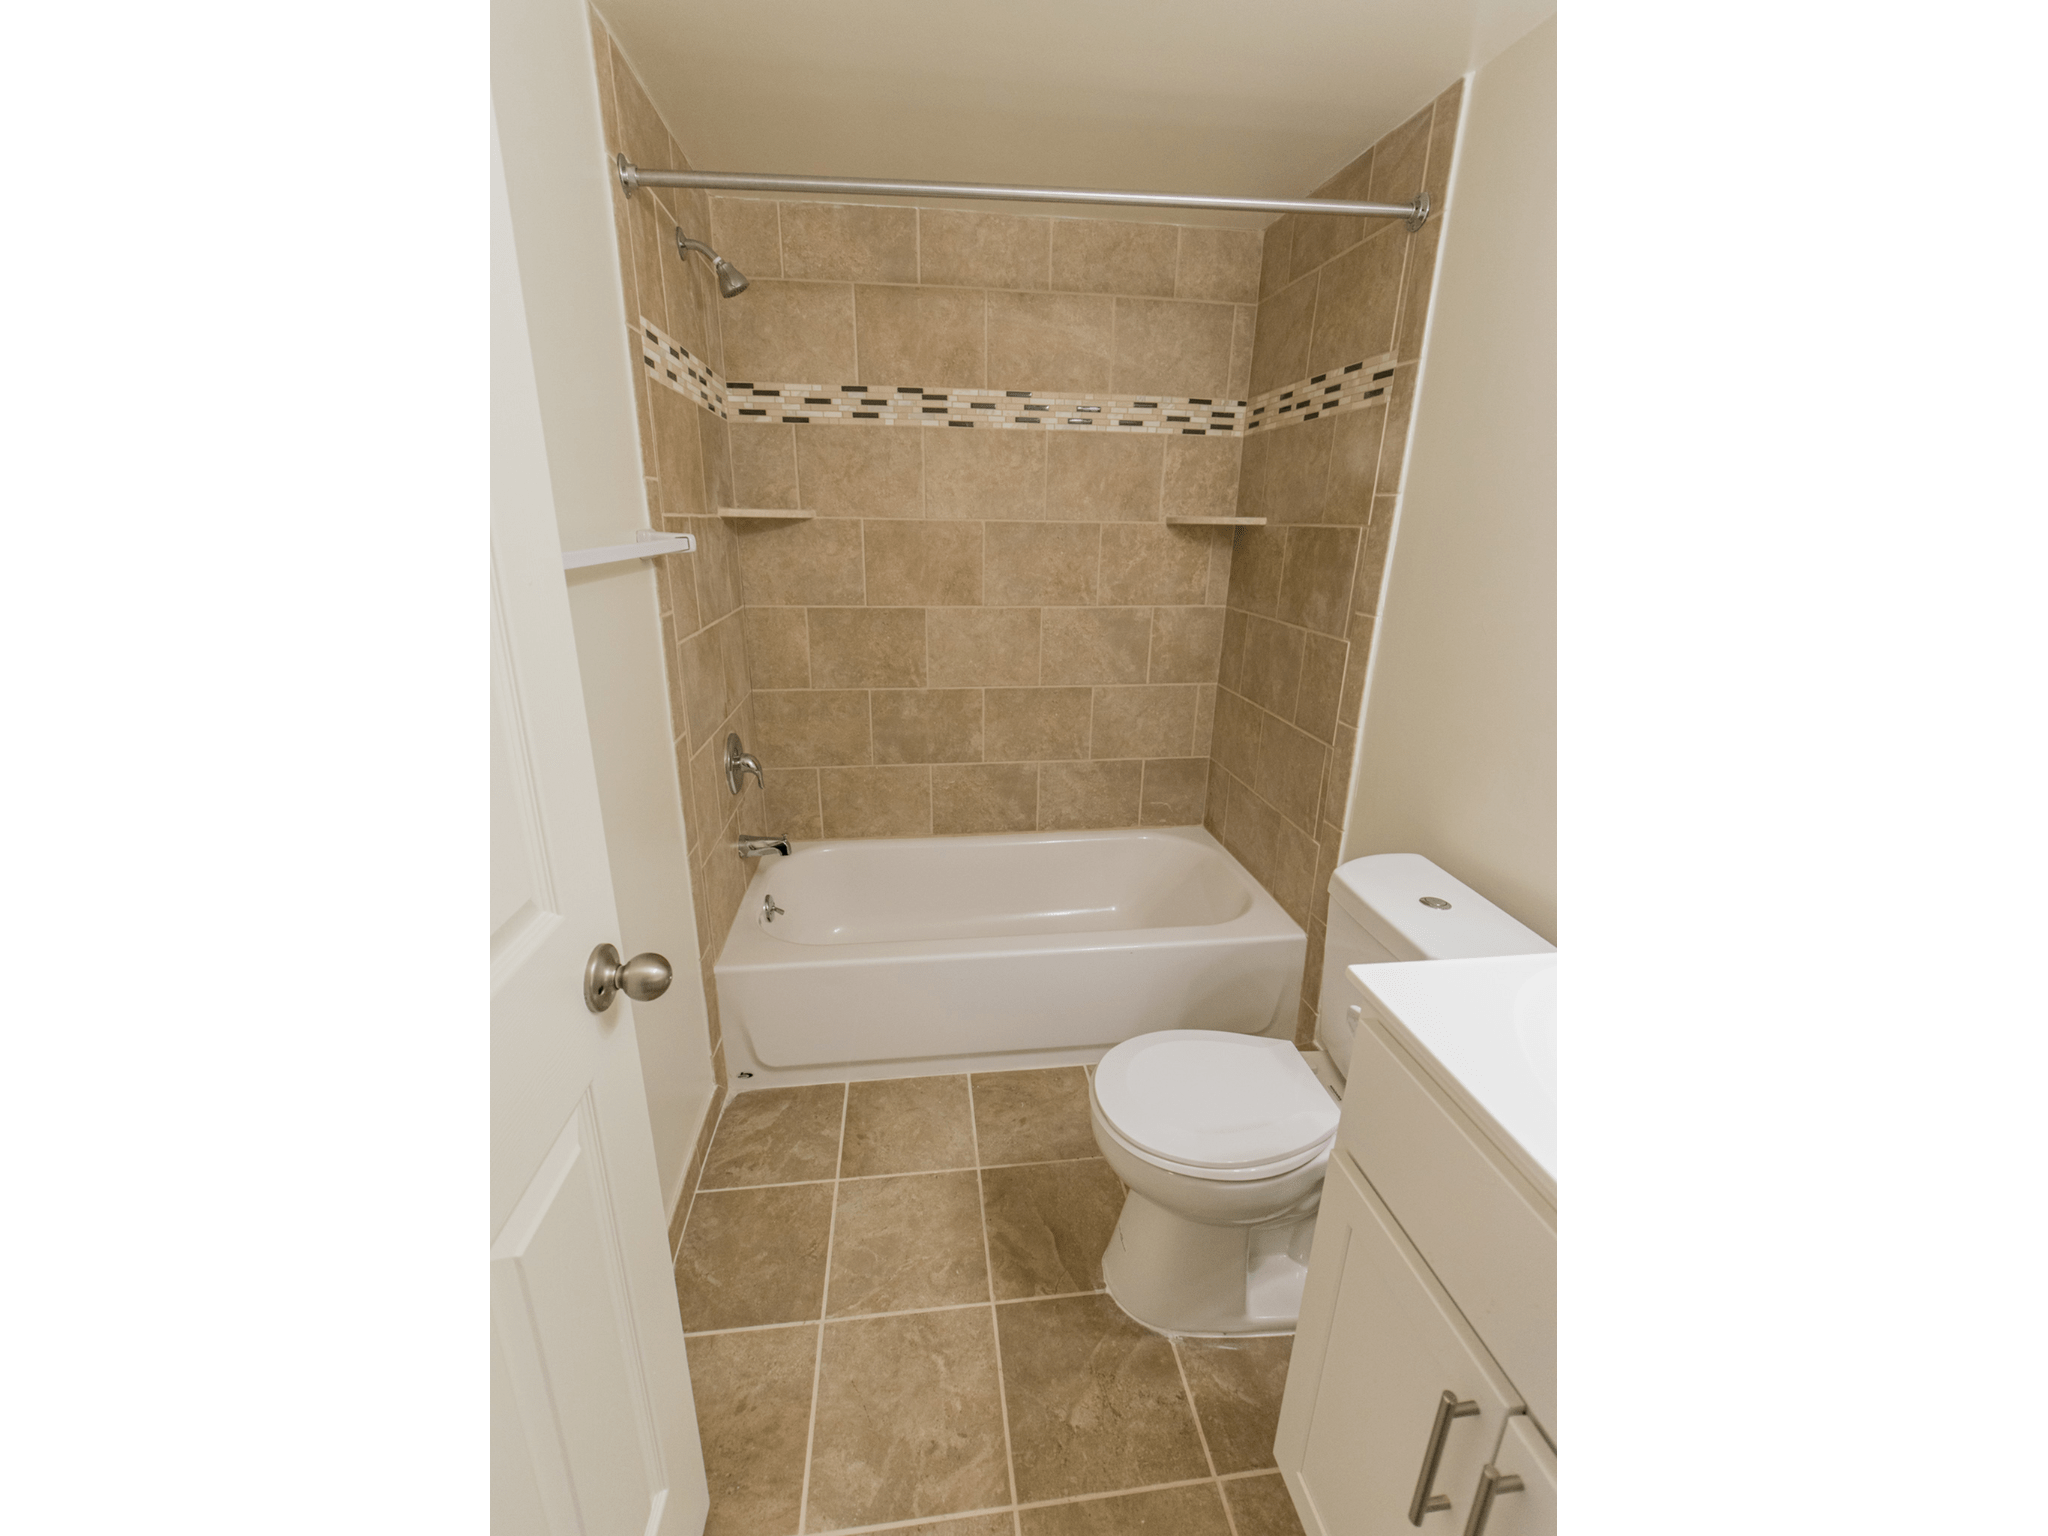 Polo Ridge tiled bathroom with tub and shower